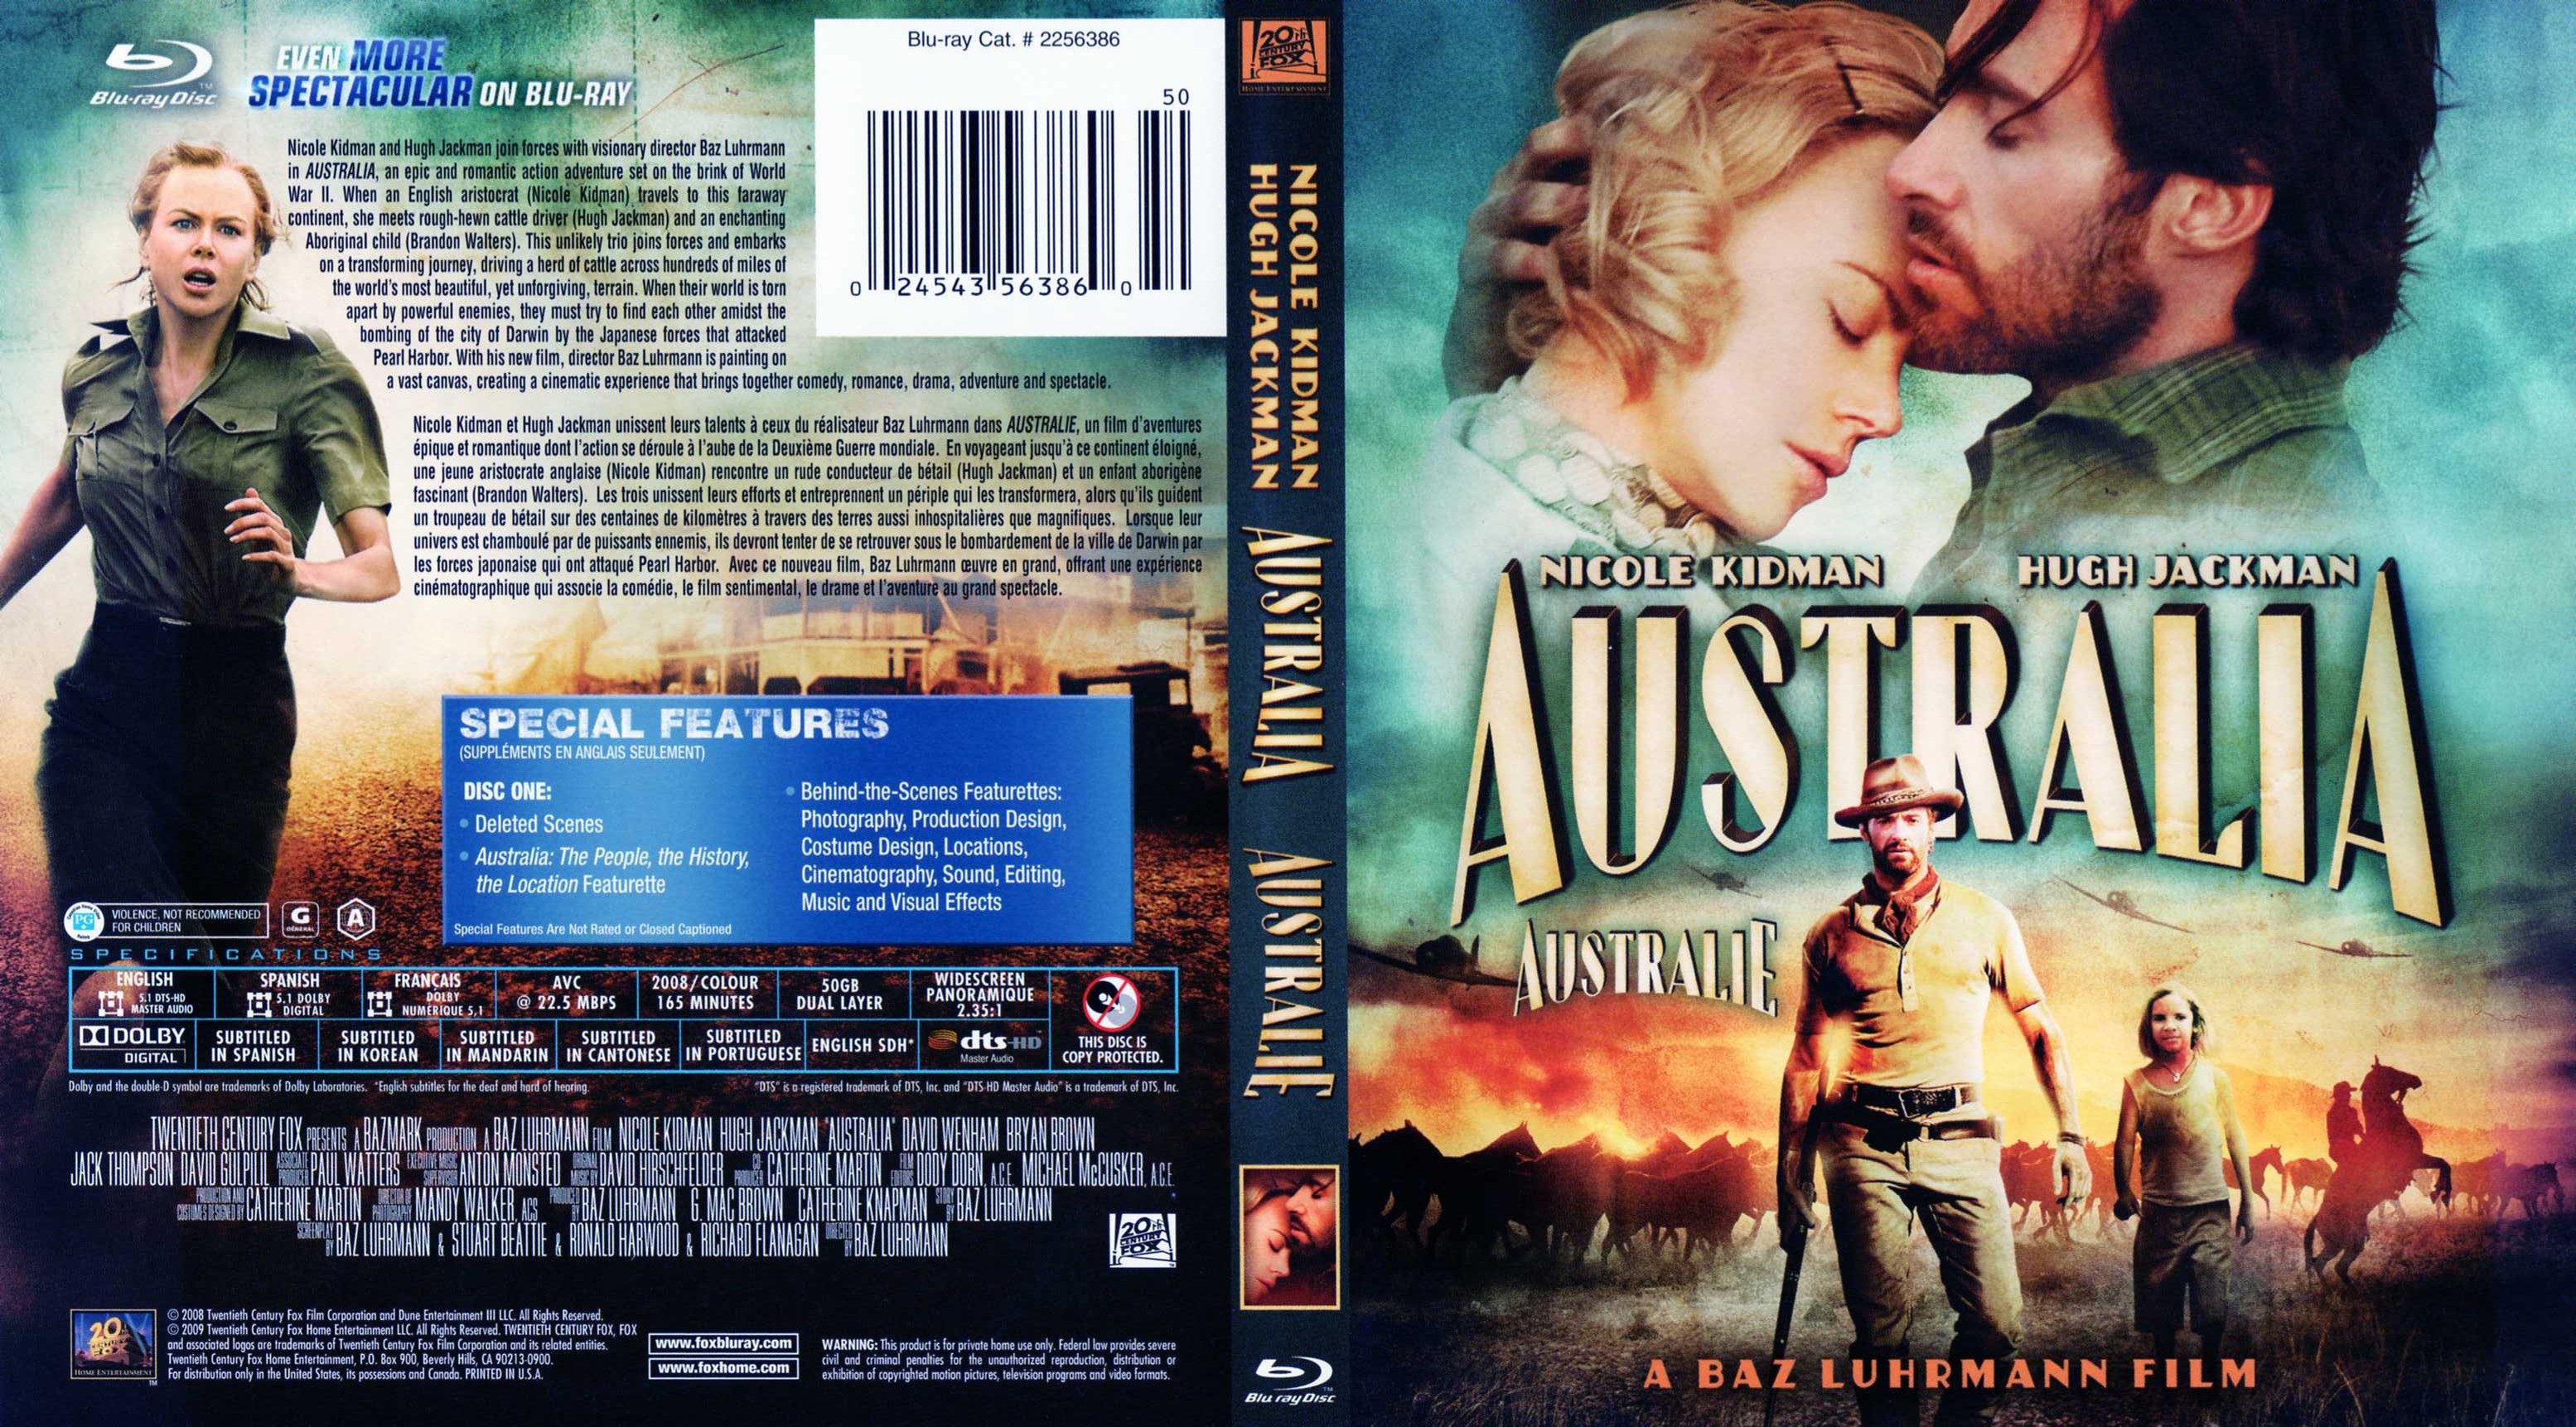 Jaquette DVD Australia - Australie Zone 1 (BLU-RAY)